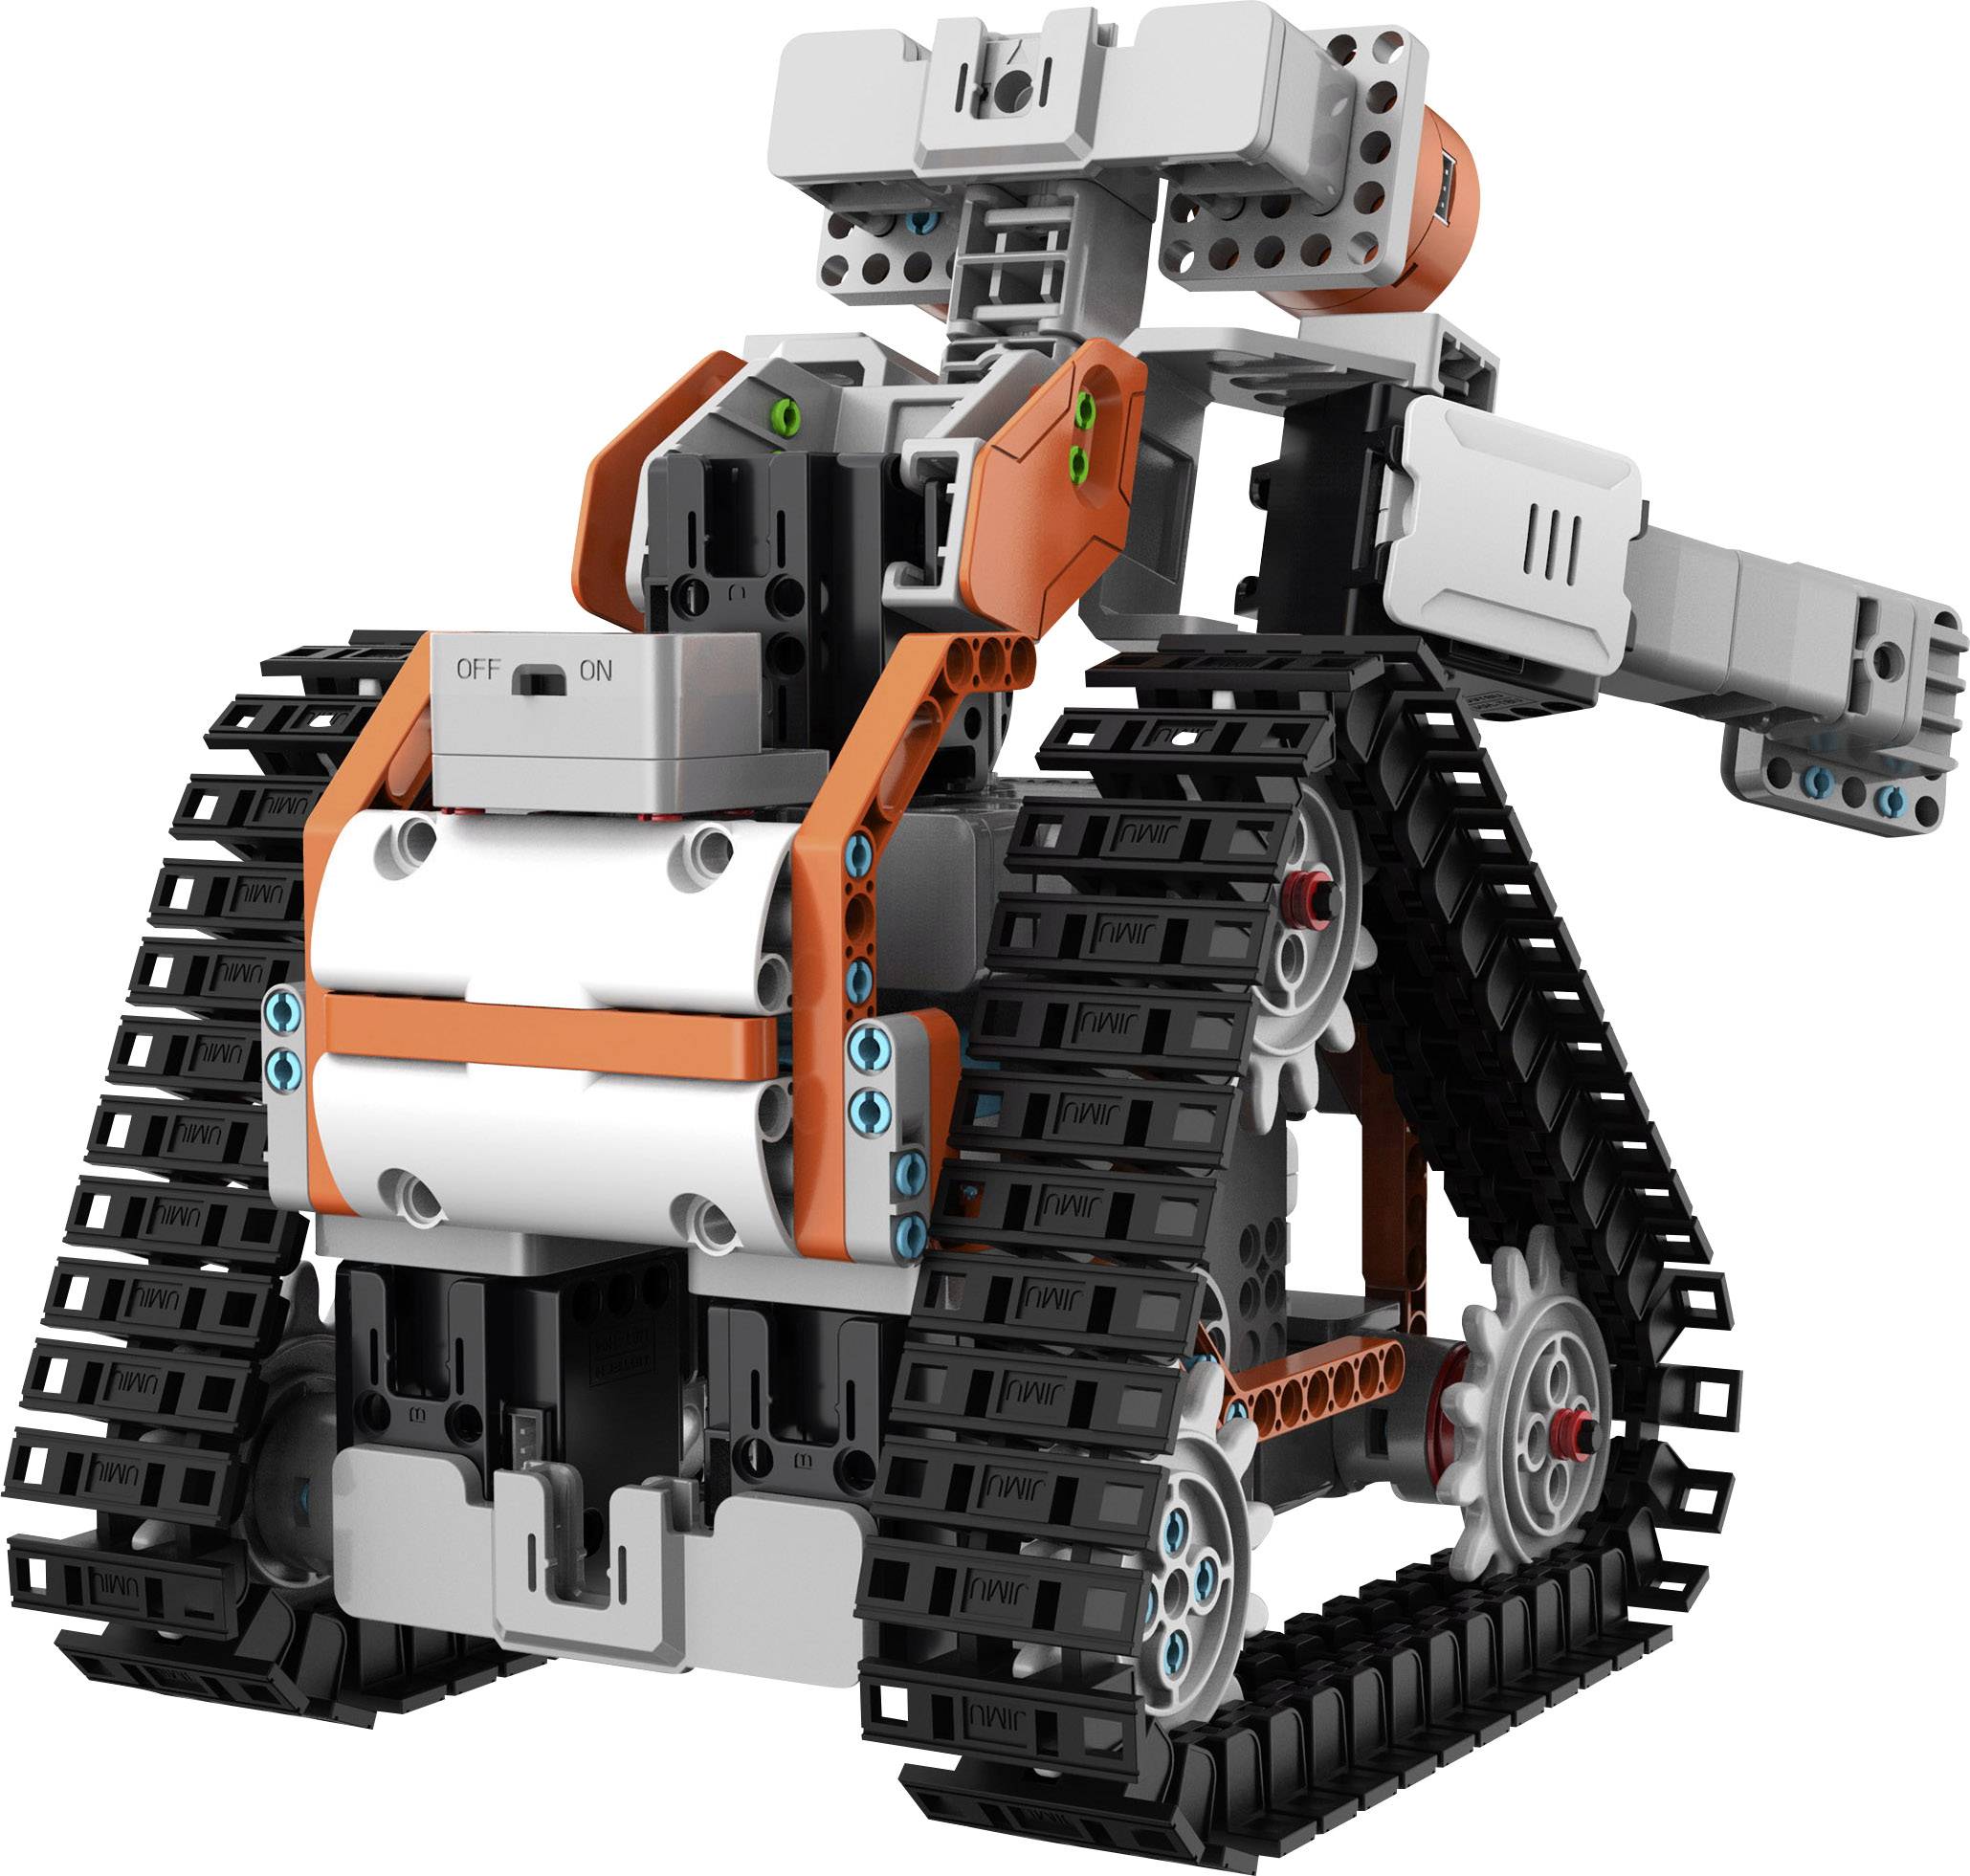 Робототехника цены. Робот конструктор Jimu. UBTECH Jimu Astrobot. UBTECH Jimu Robot Astrobot. Программируемый конструктор Jimu.